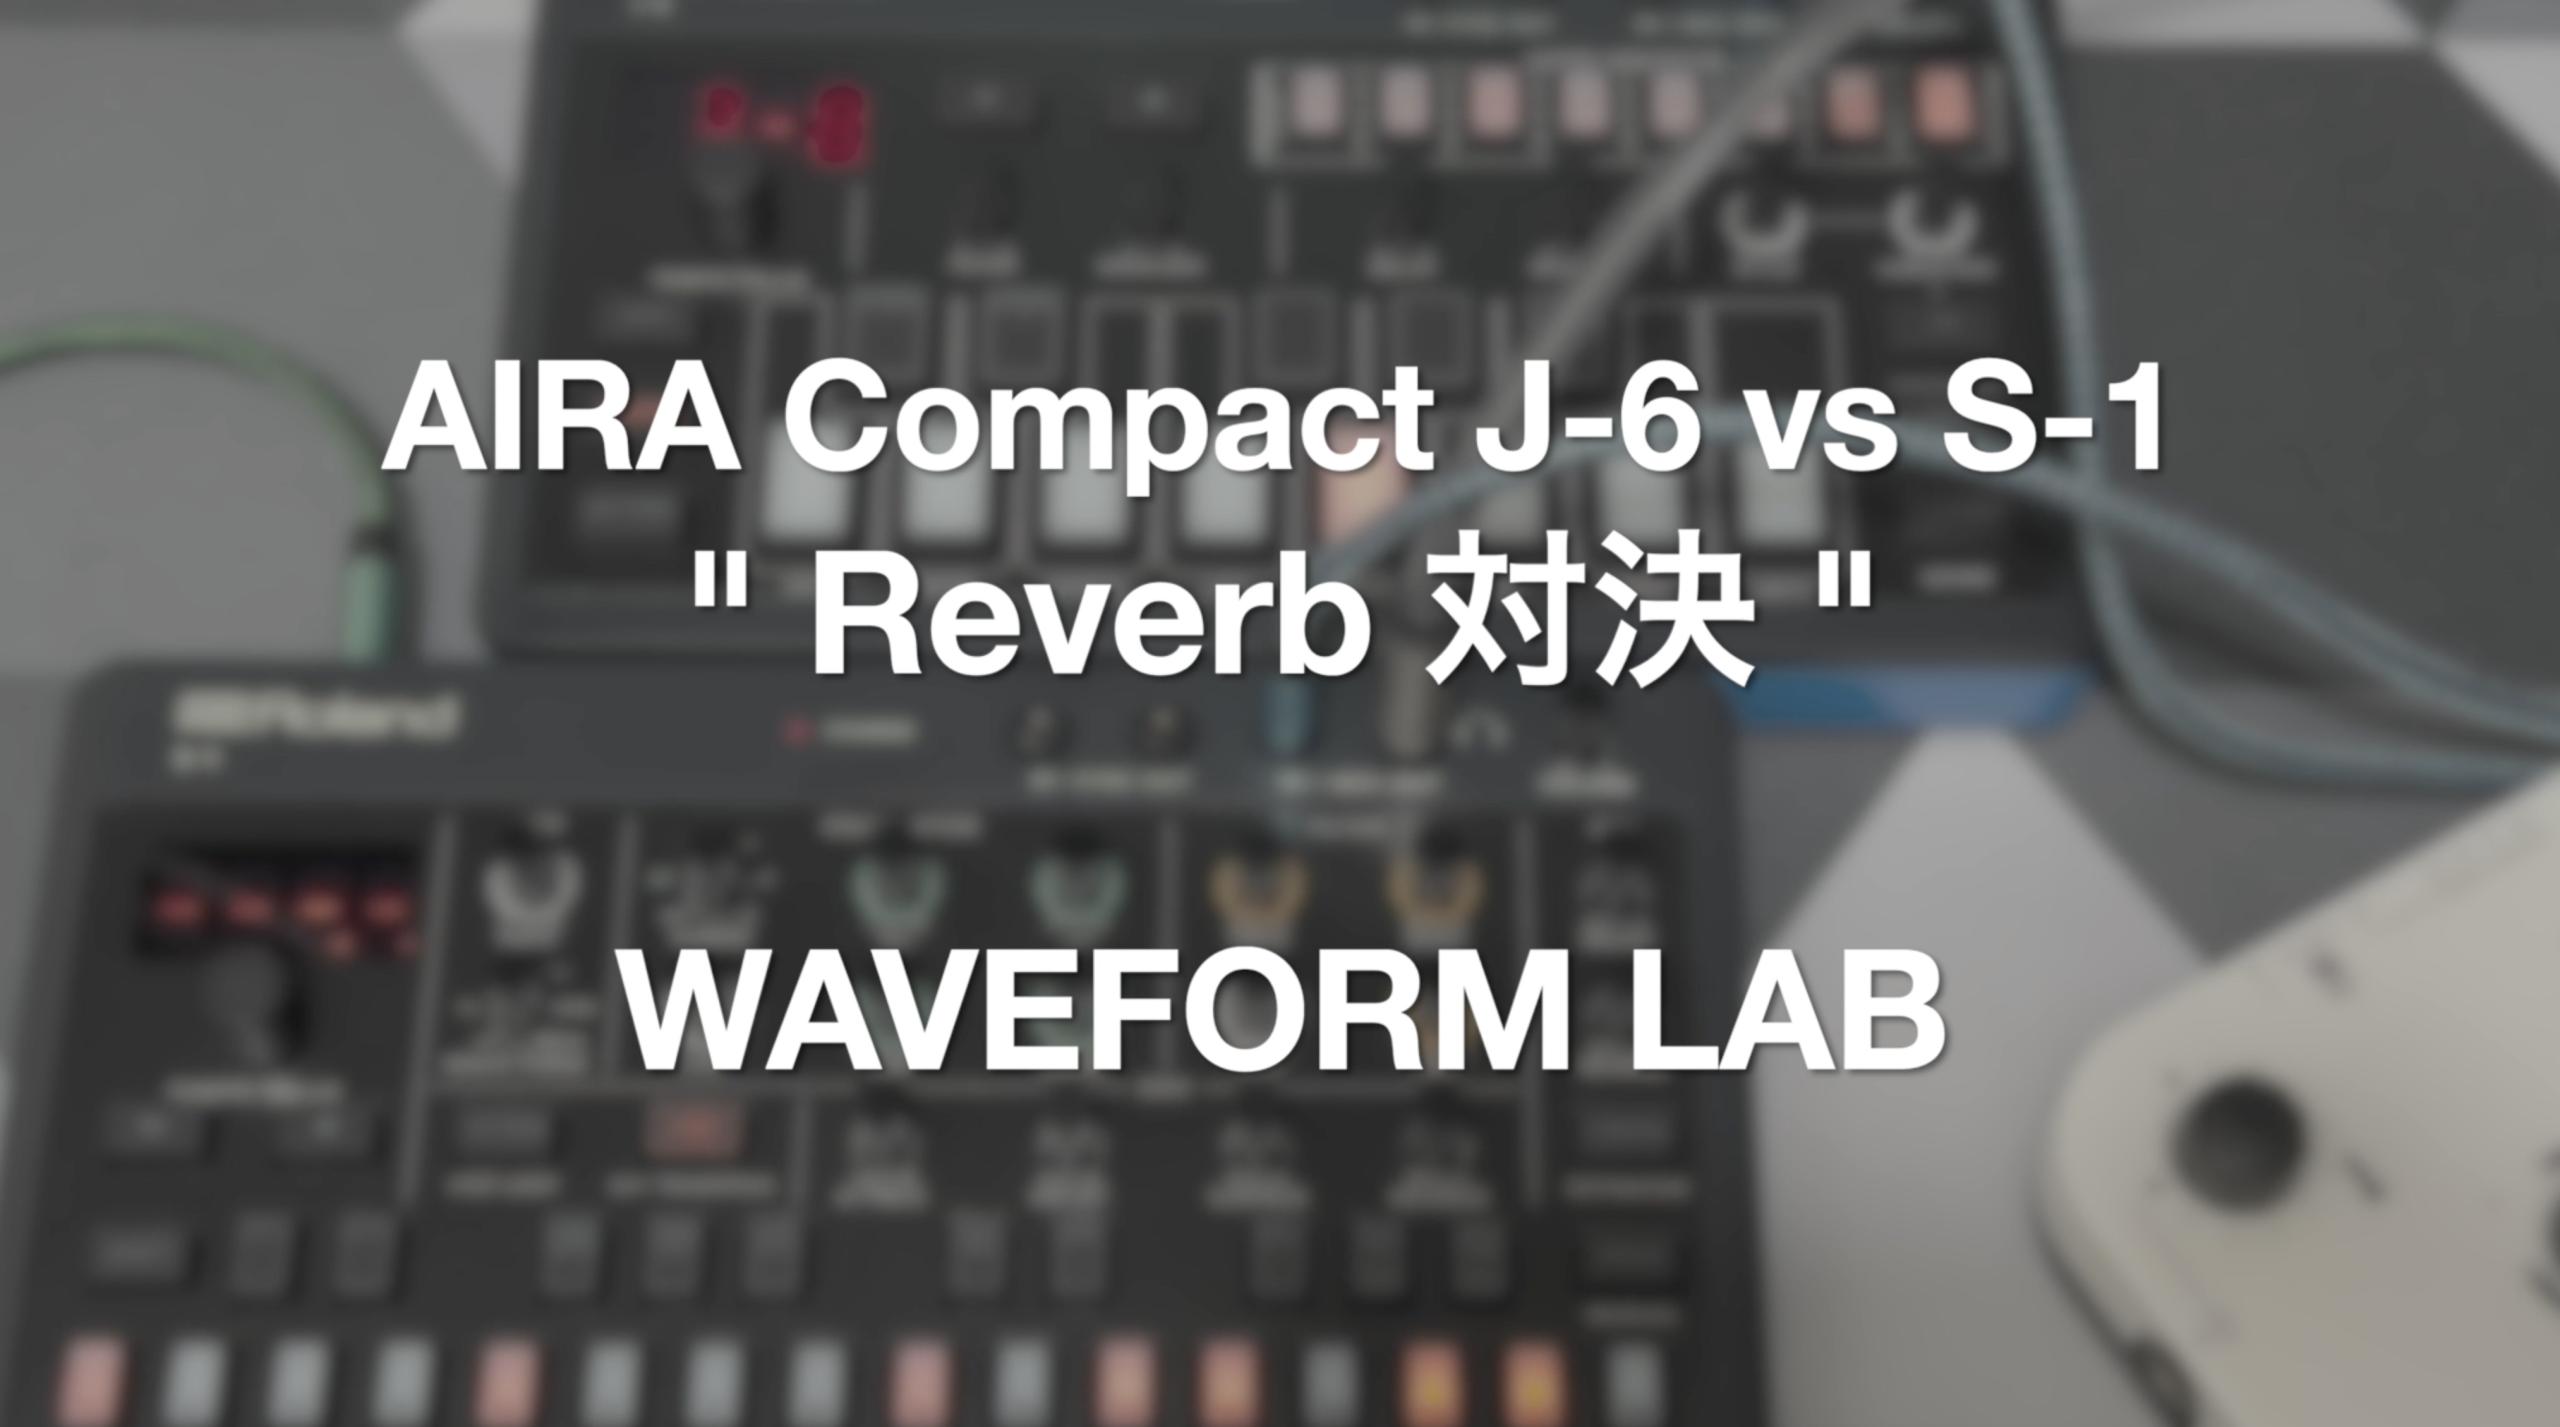 AIRA Compact J-6 vs S-1 Reverb 対決